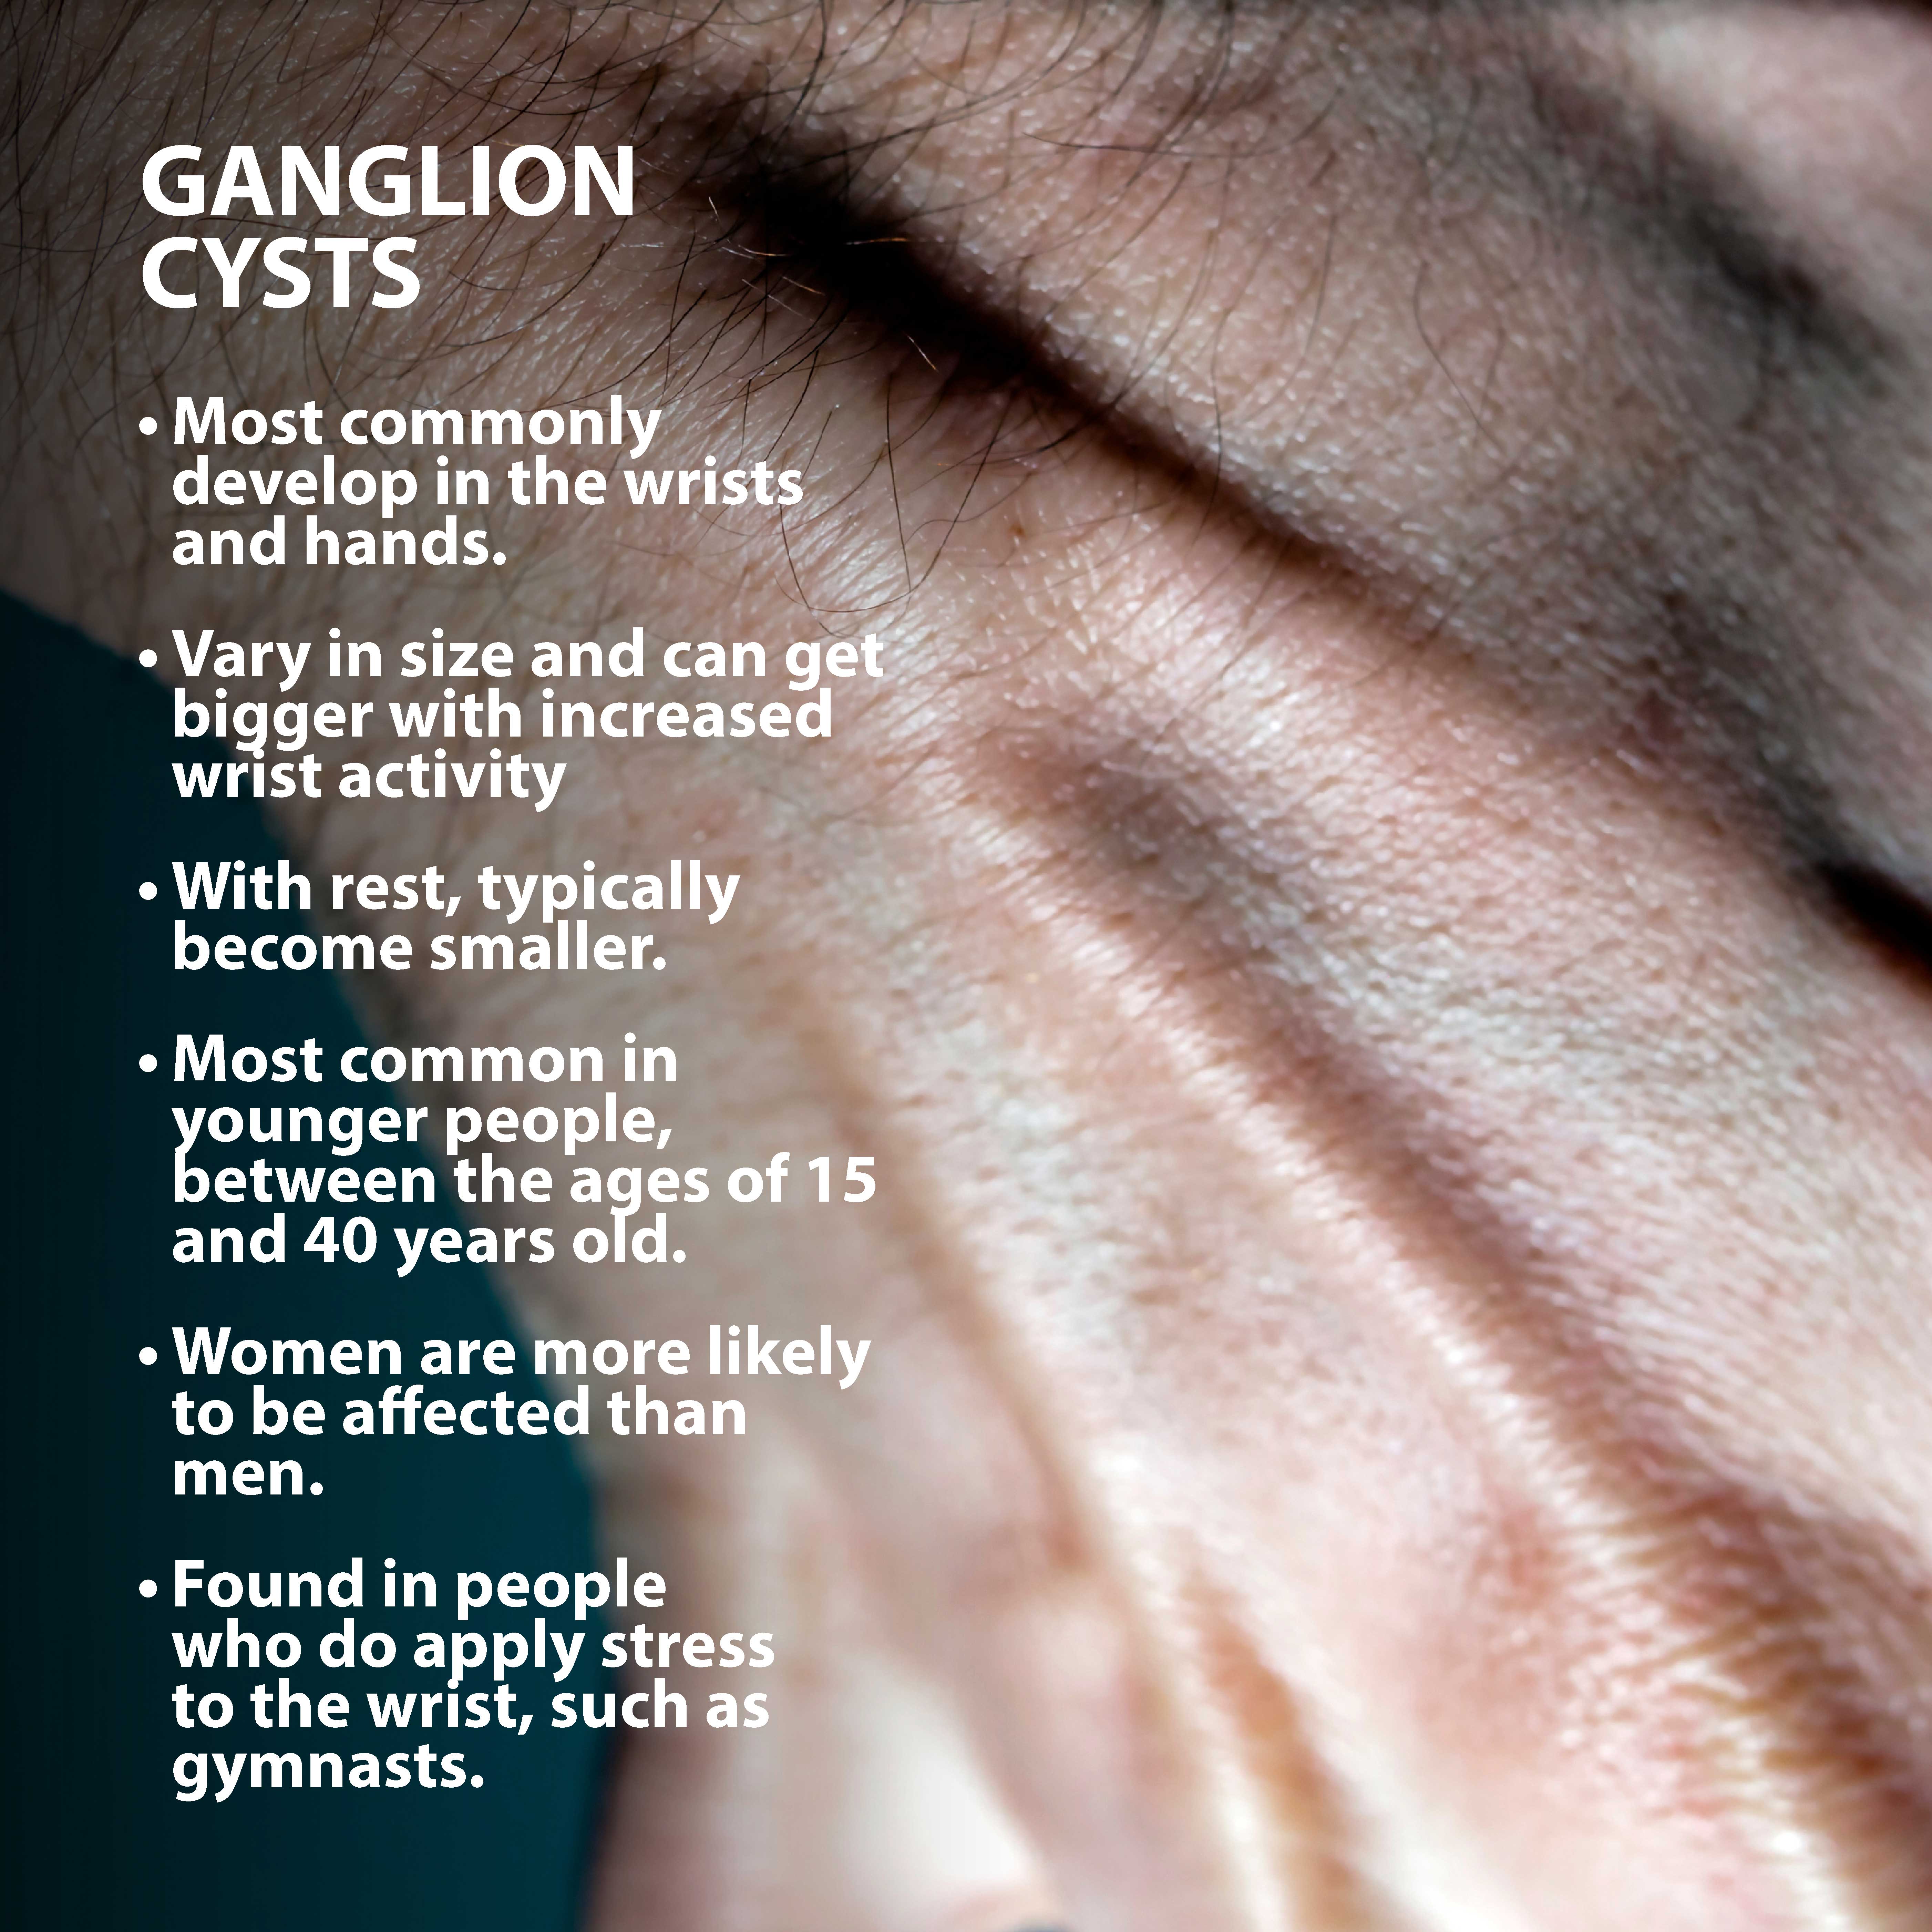 ganglion cysts symptoms graphic